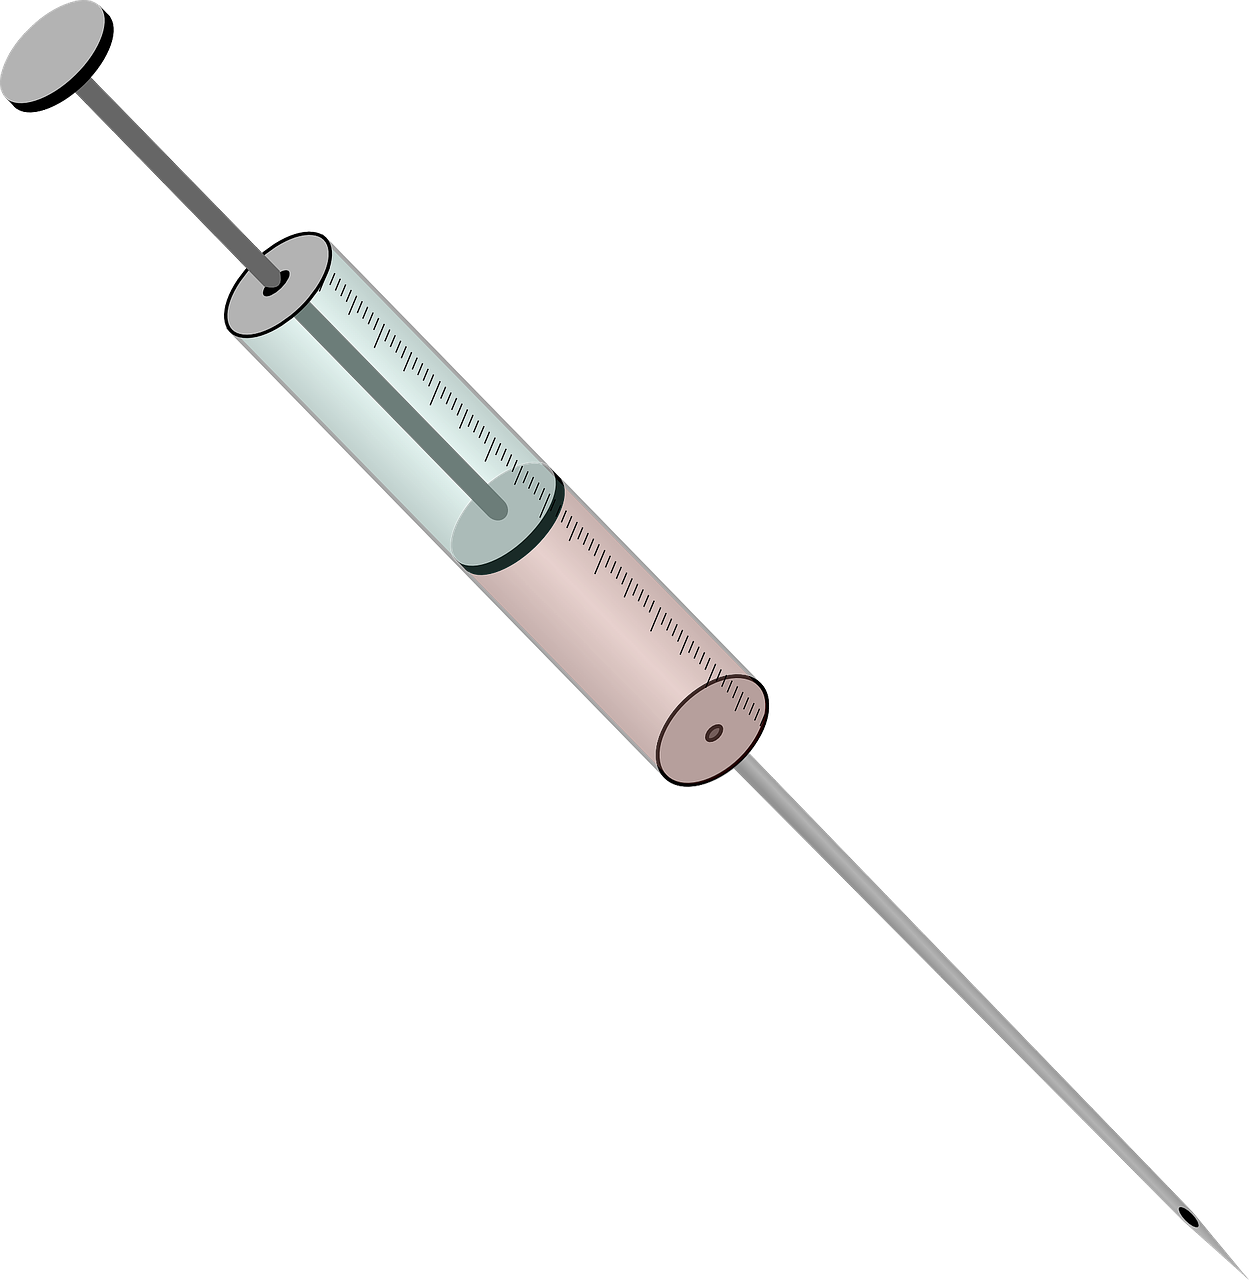 Syringe Needle PNG HD Quality